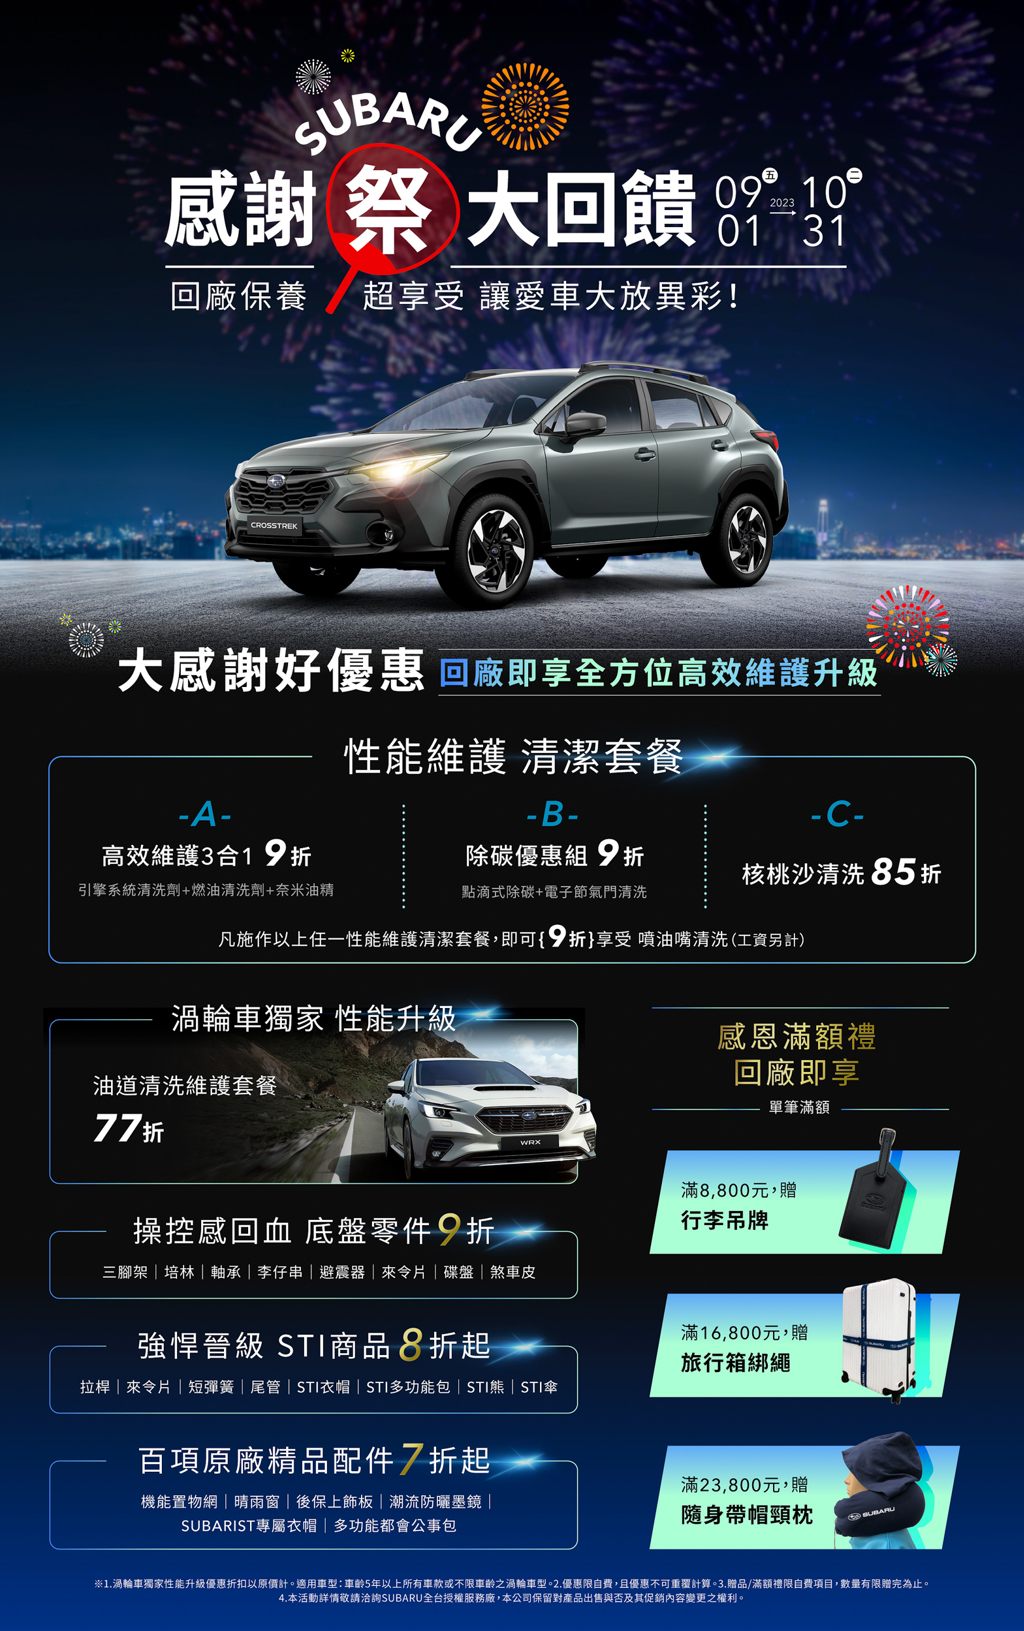 Subaru 本月推感謝祭活動 單筆消費滿額再享回廠精緻好禮(圖/2gamesome)